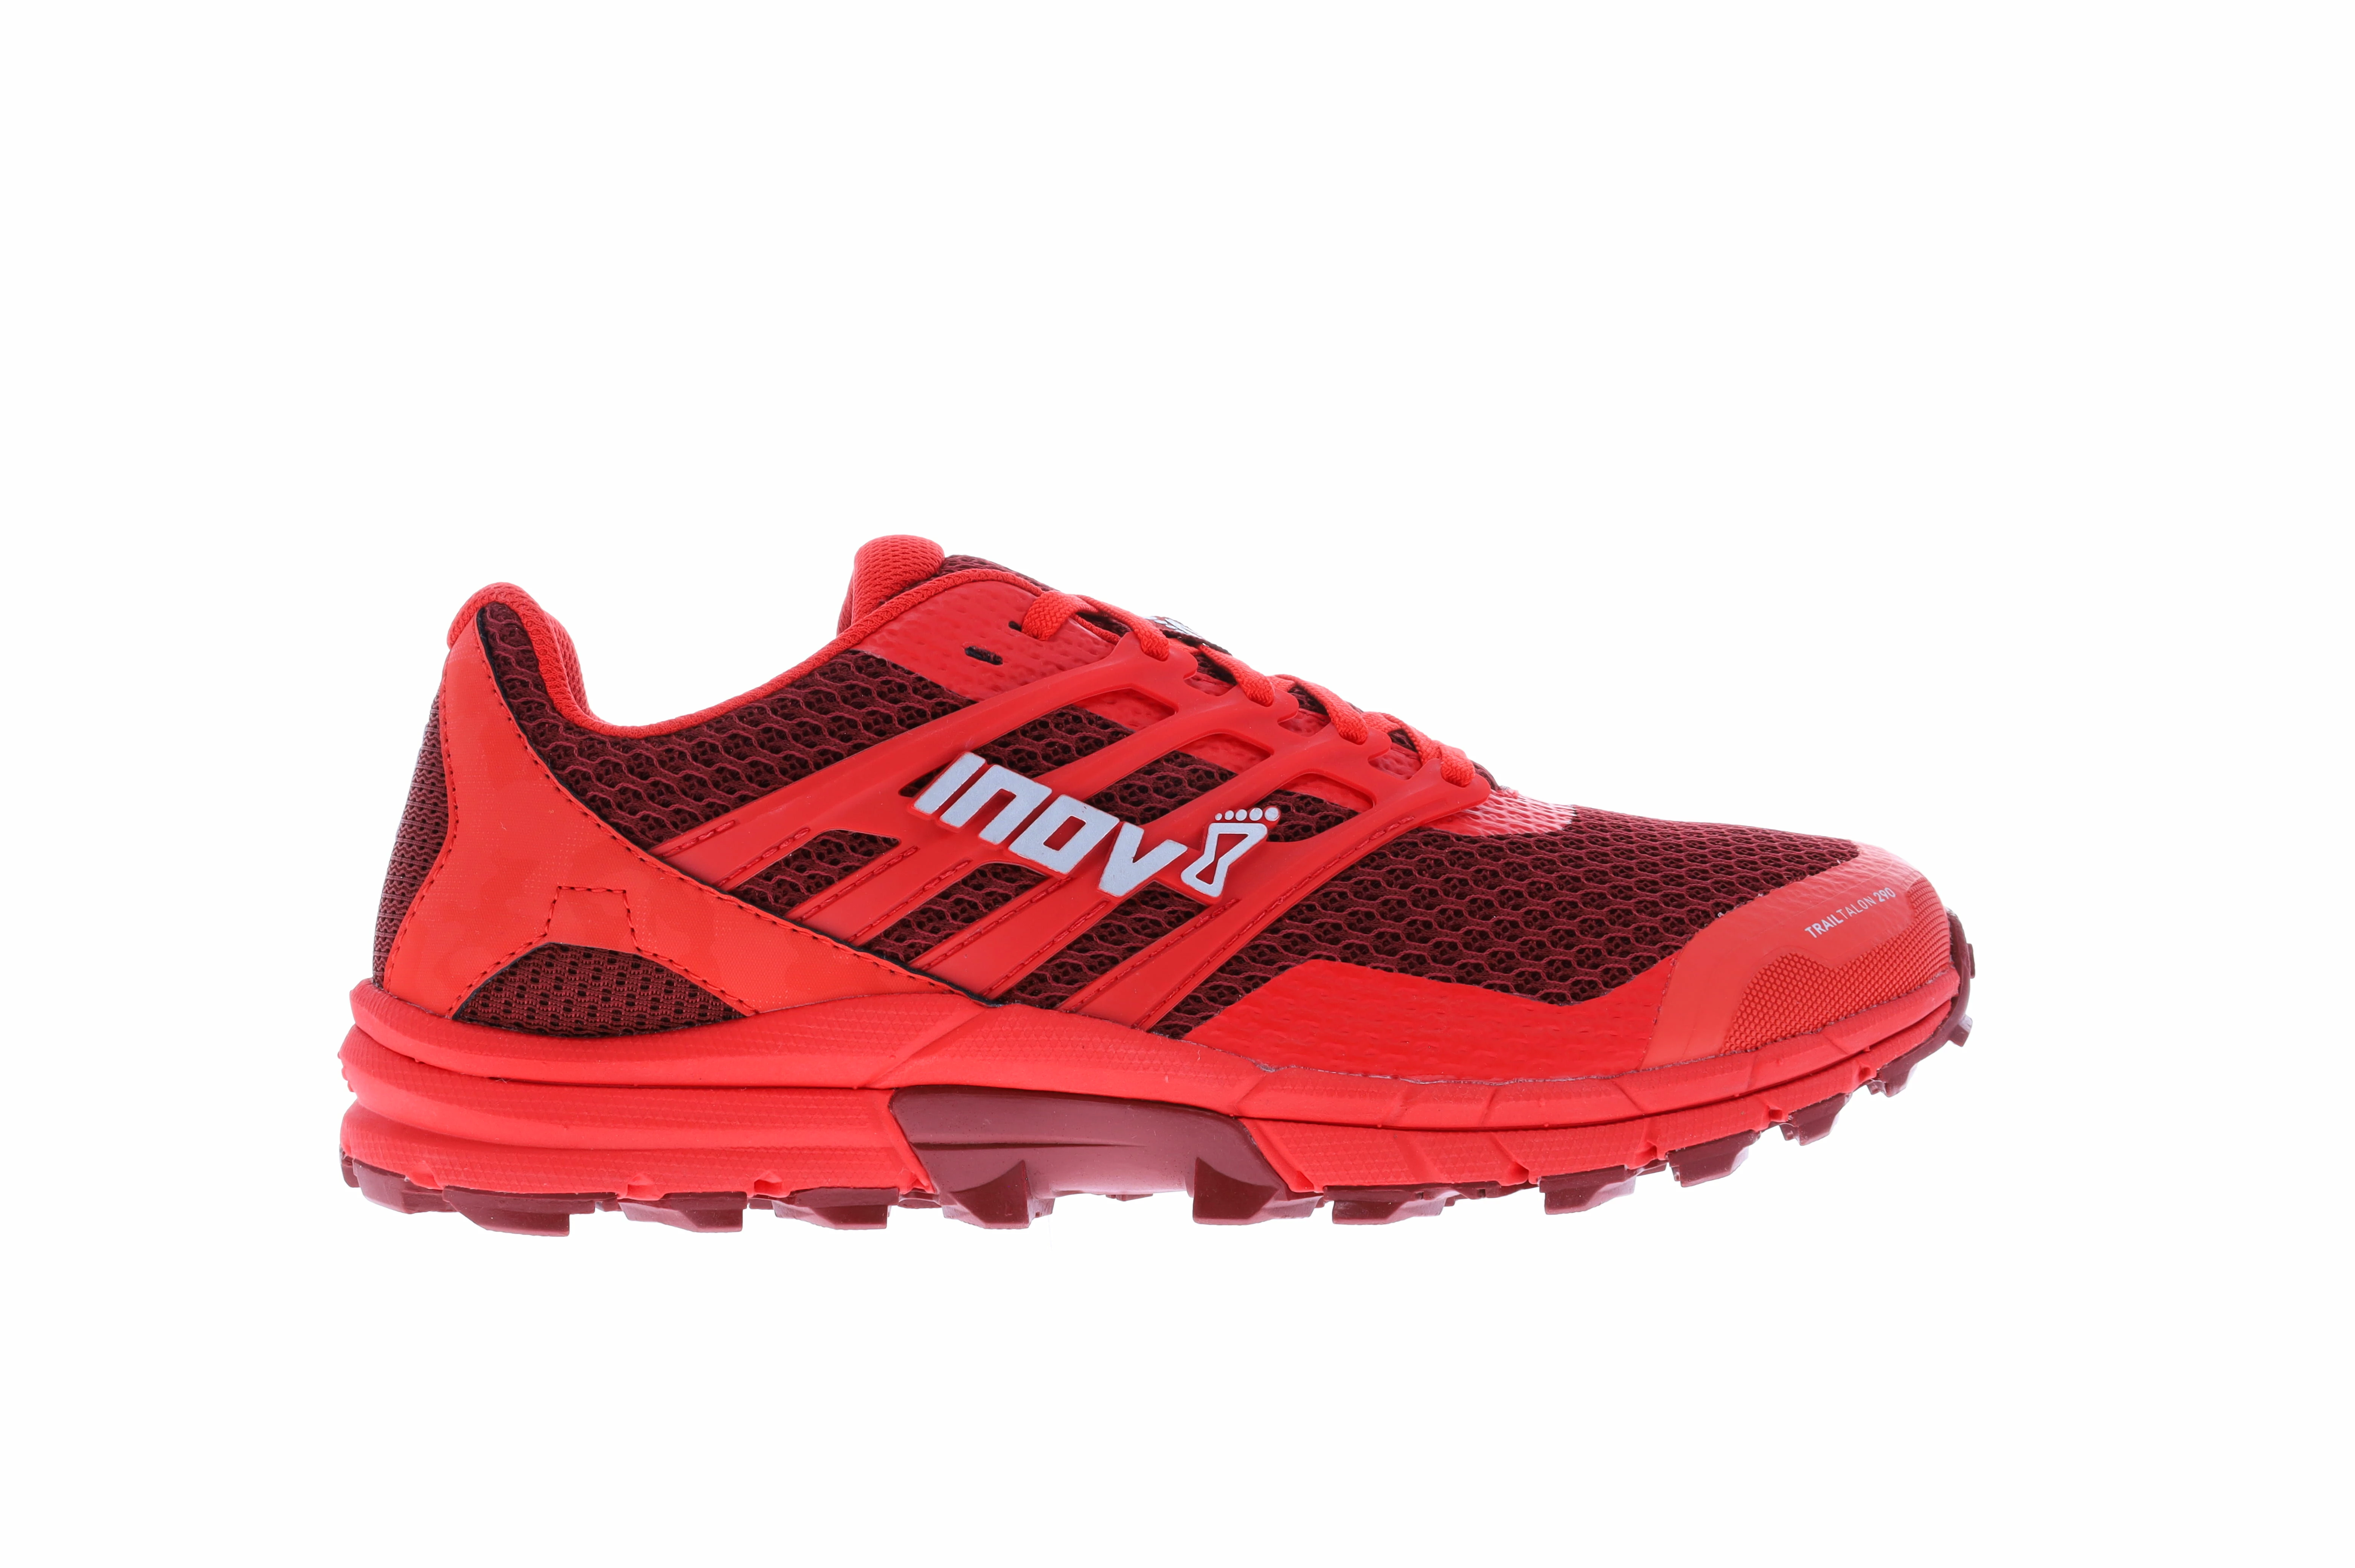 Inov-8 Trail Talon 290(s) UK 9.5 Men's Running Shoes